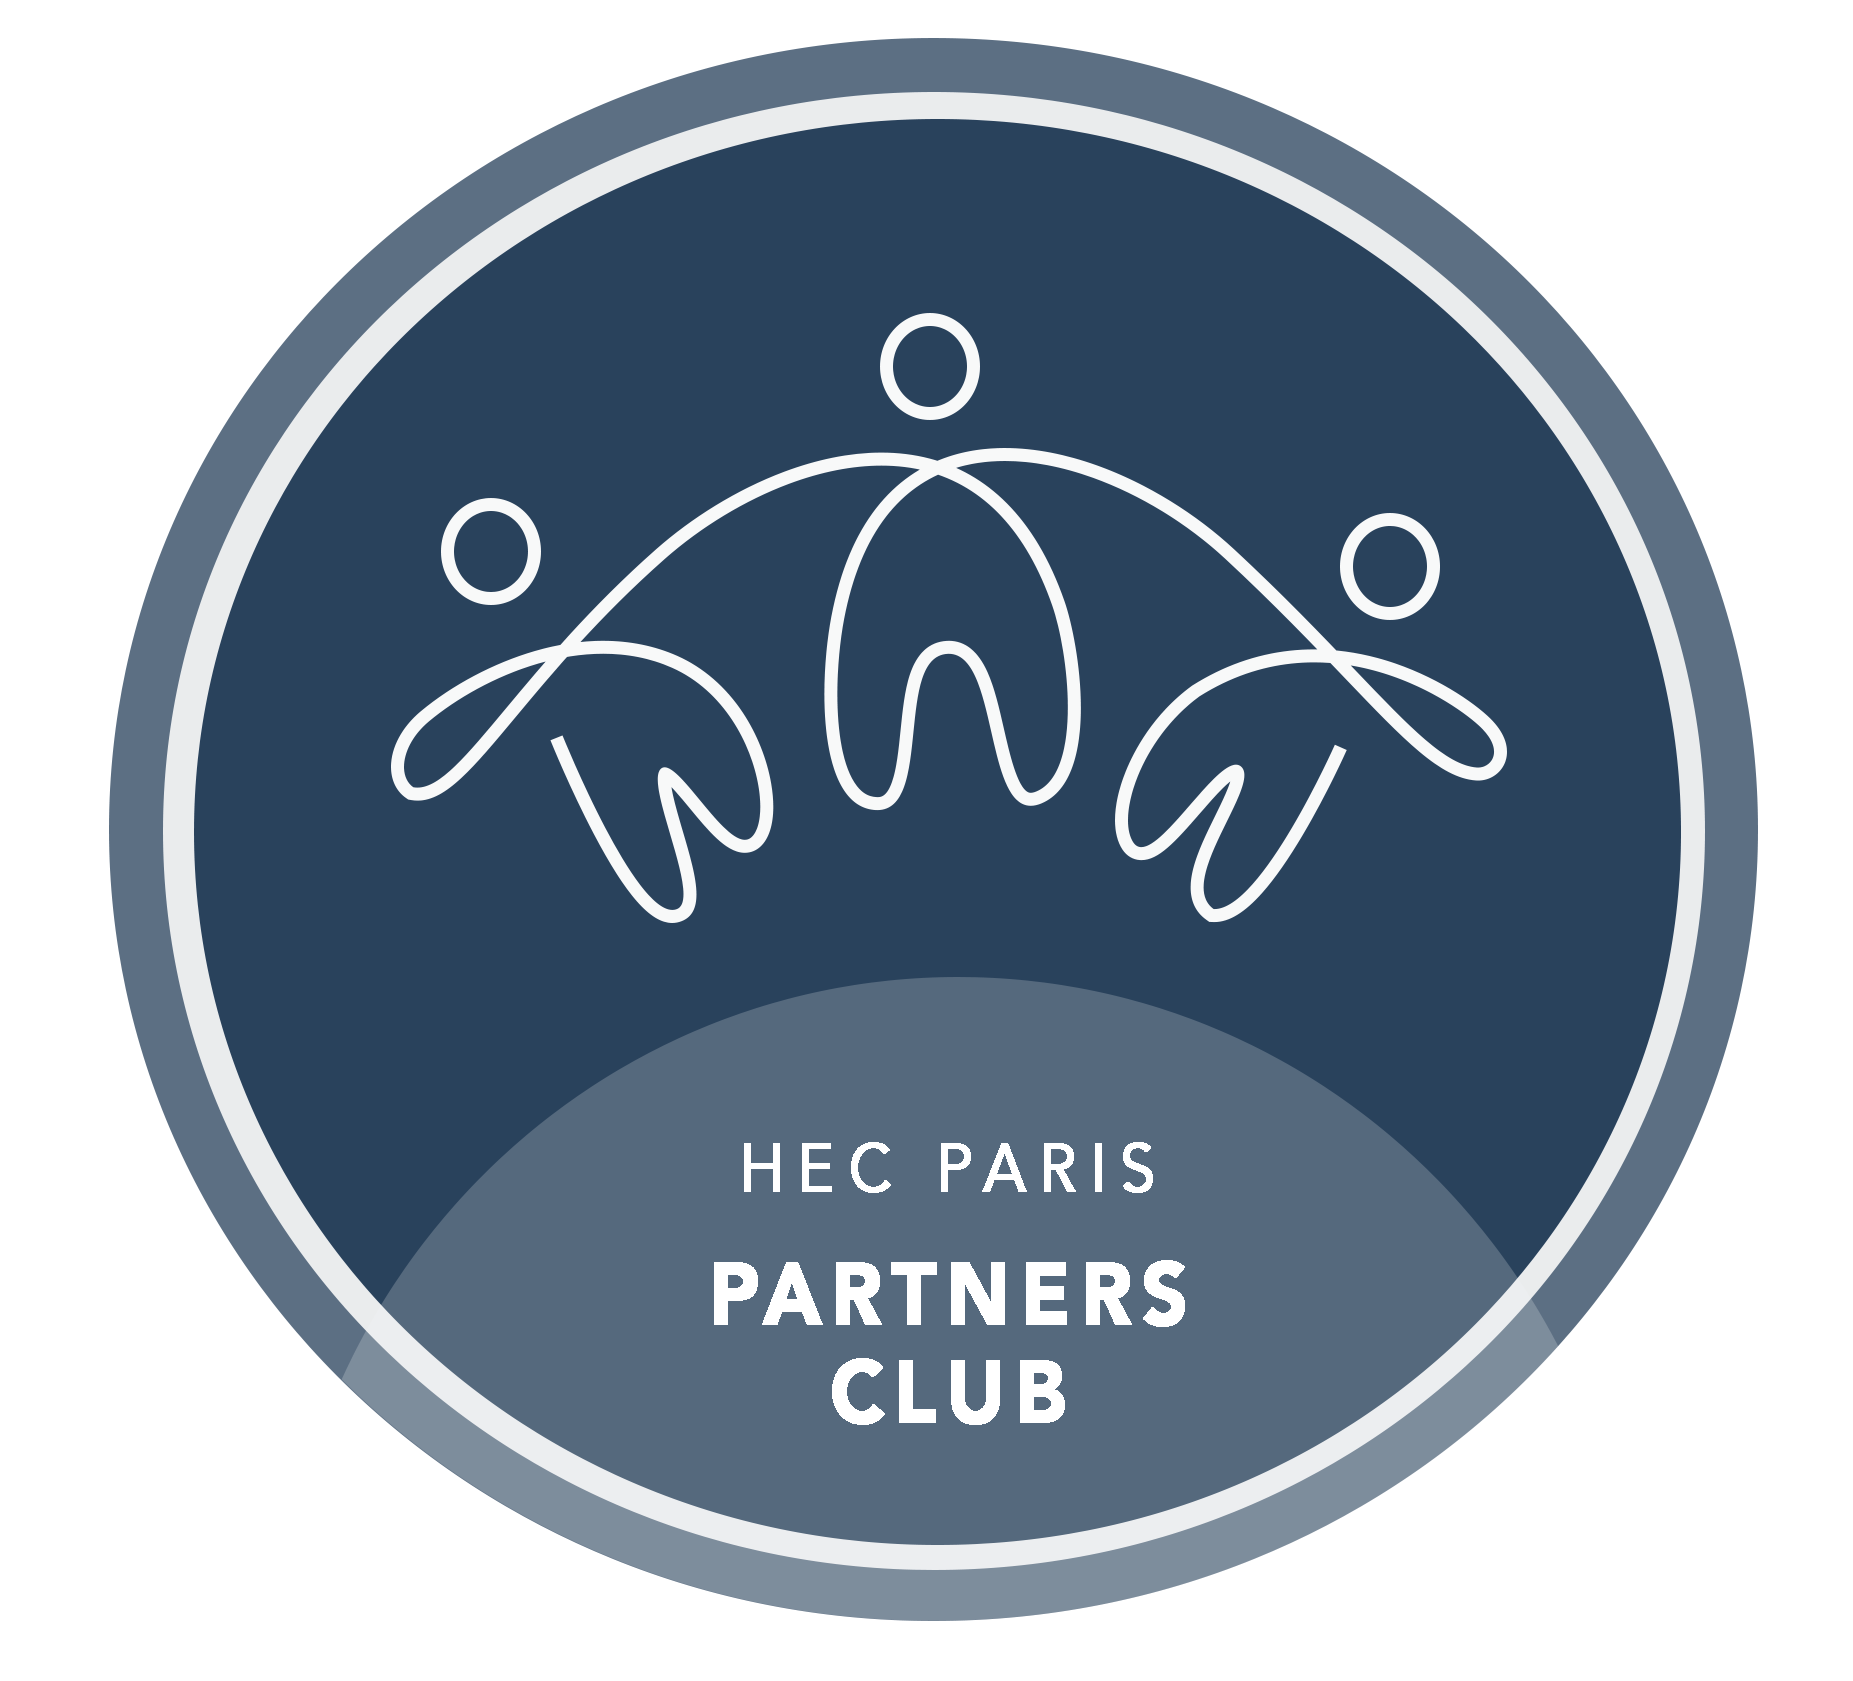 HEC PARIS PARTNERS CLUB LOGO